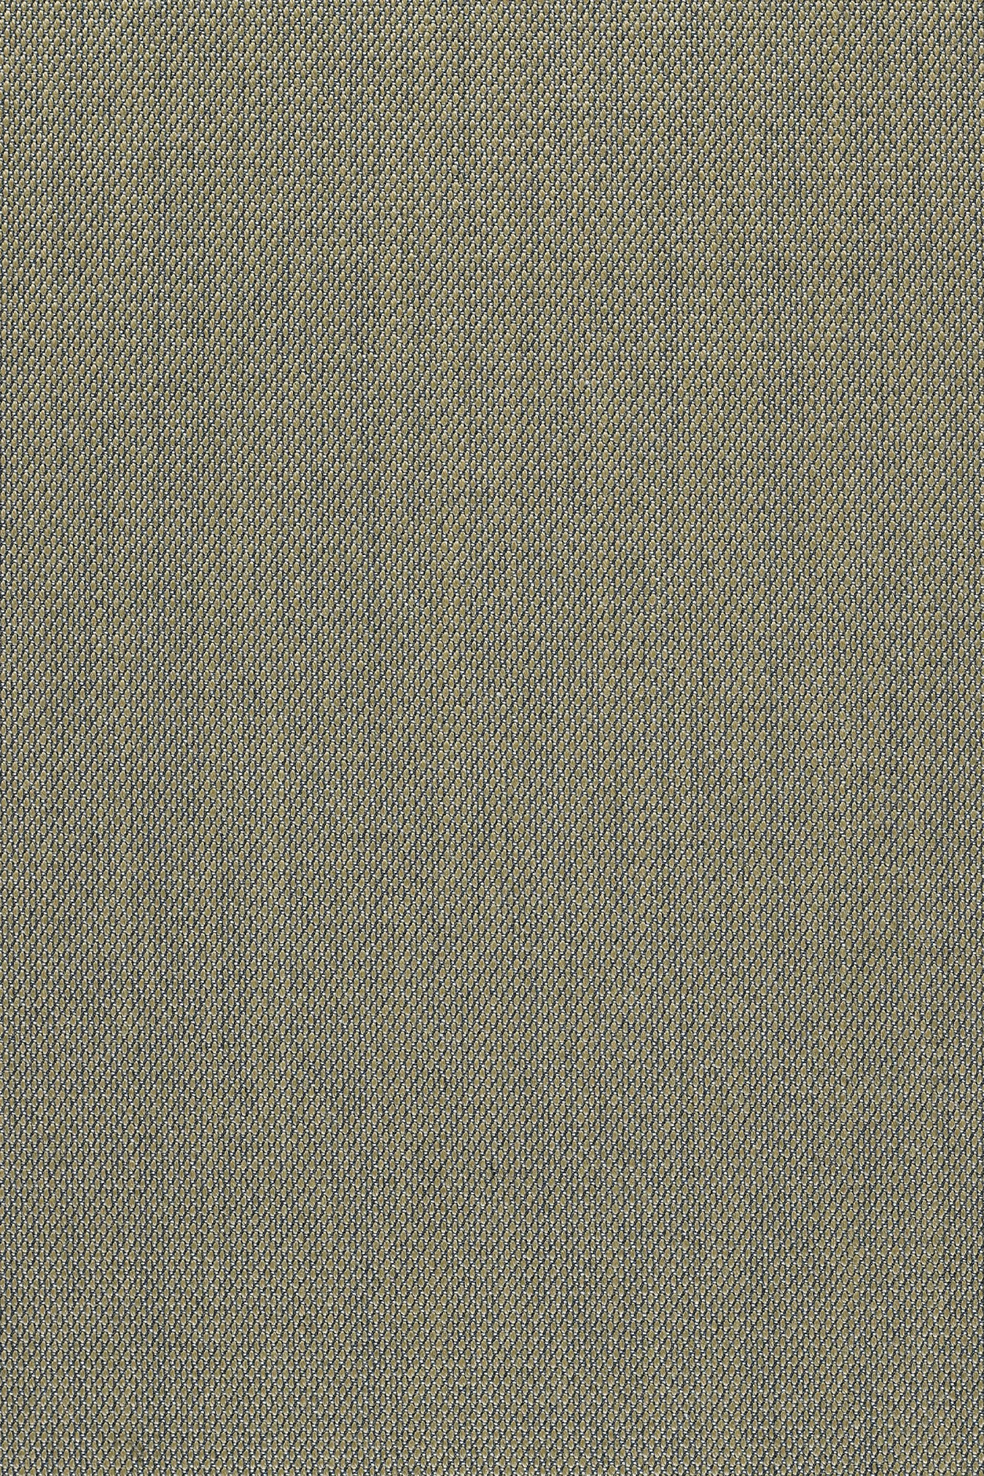 Fabric sample Steelcut Trio 3 253 brown